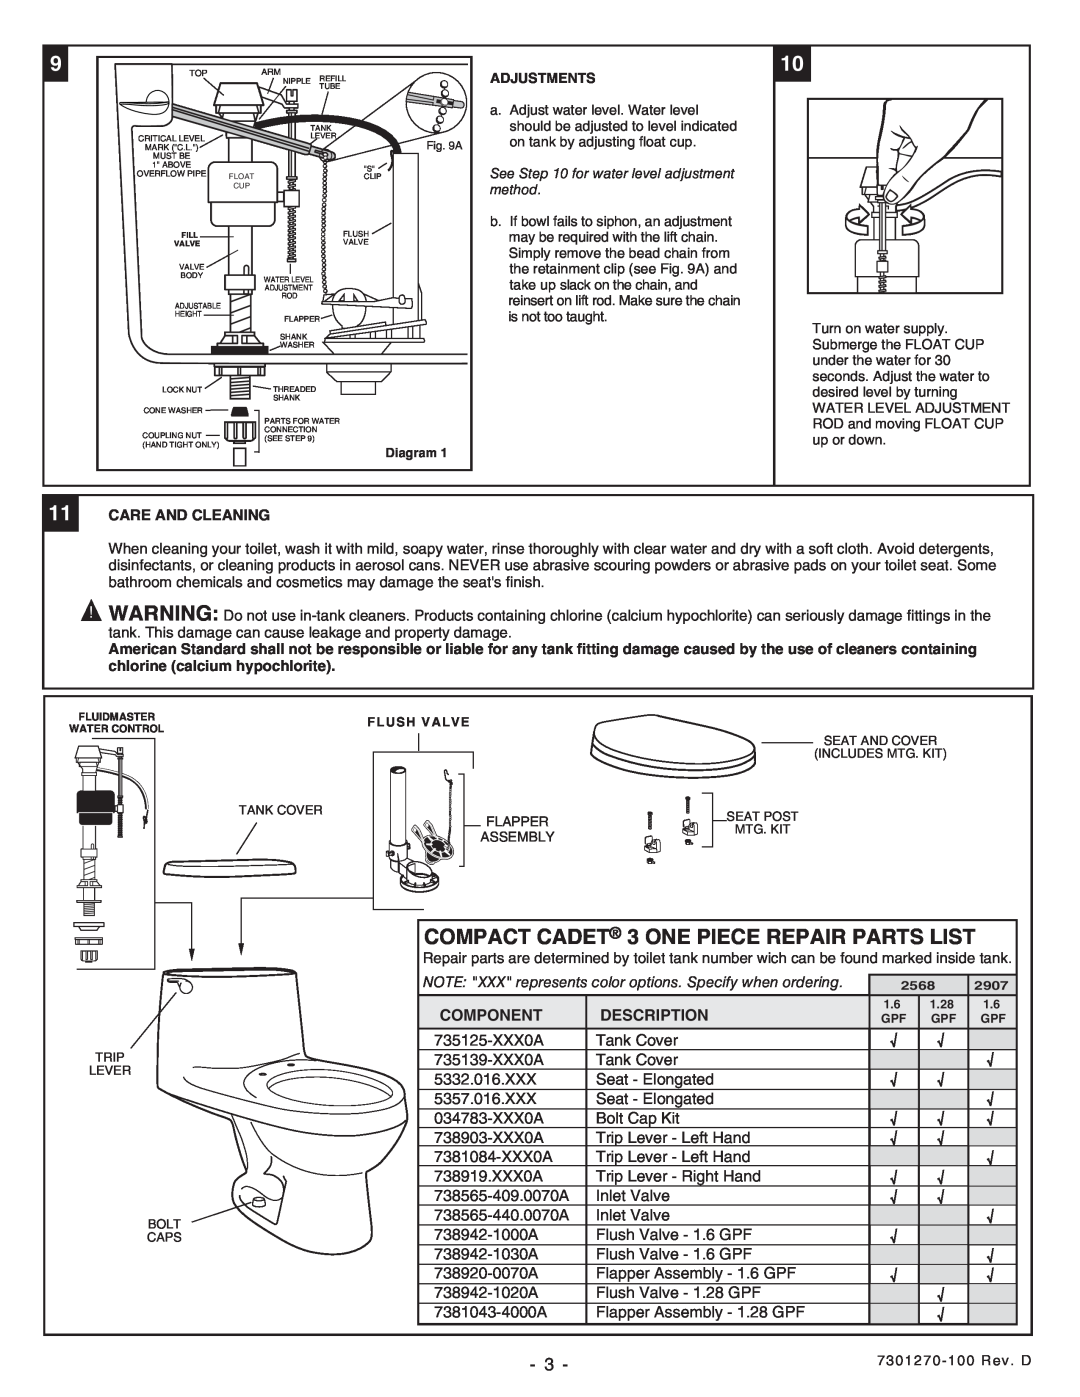 American Standard 2907, 2568 installation instructions COMPACT CADET 3 ONE PIECE REPAIR PARTS LIST, Component, Description 